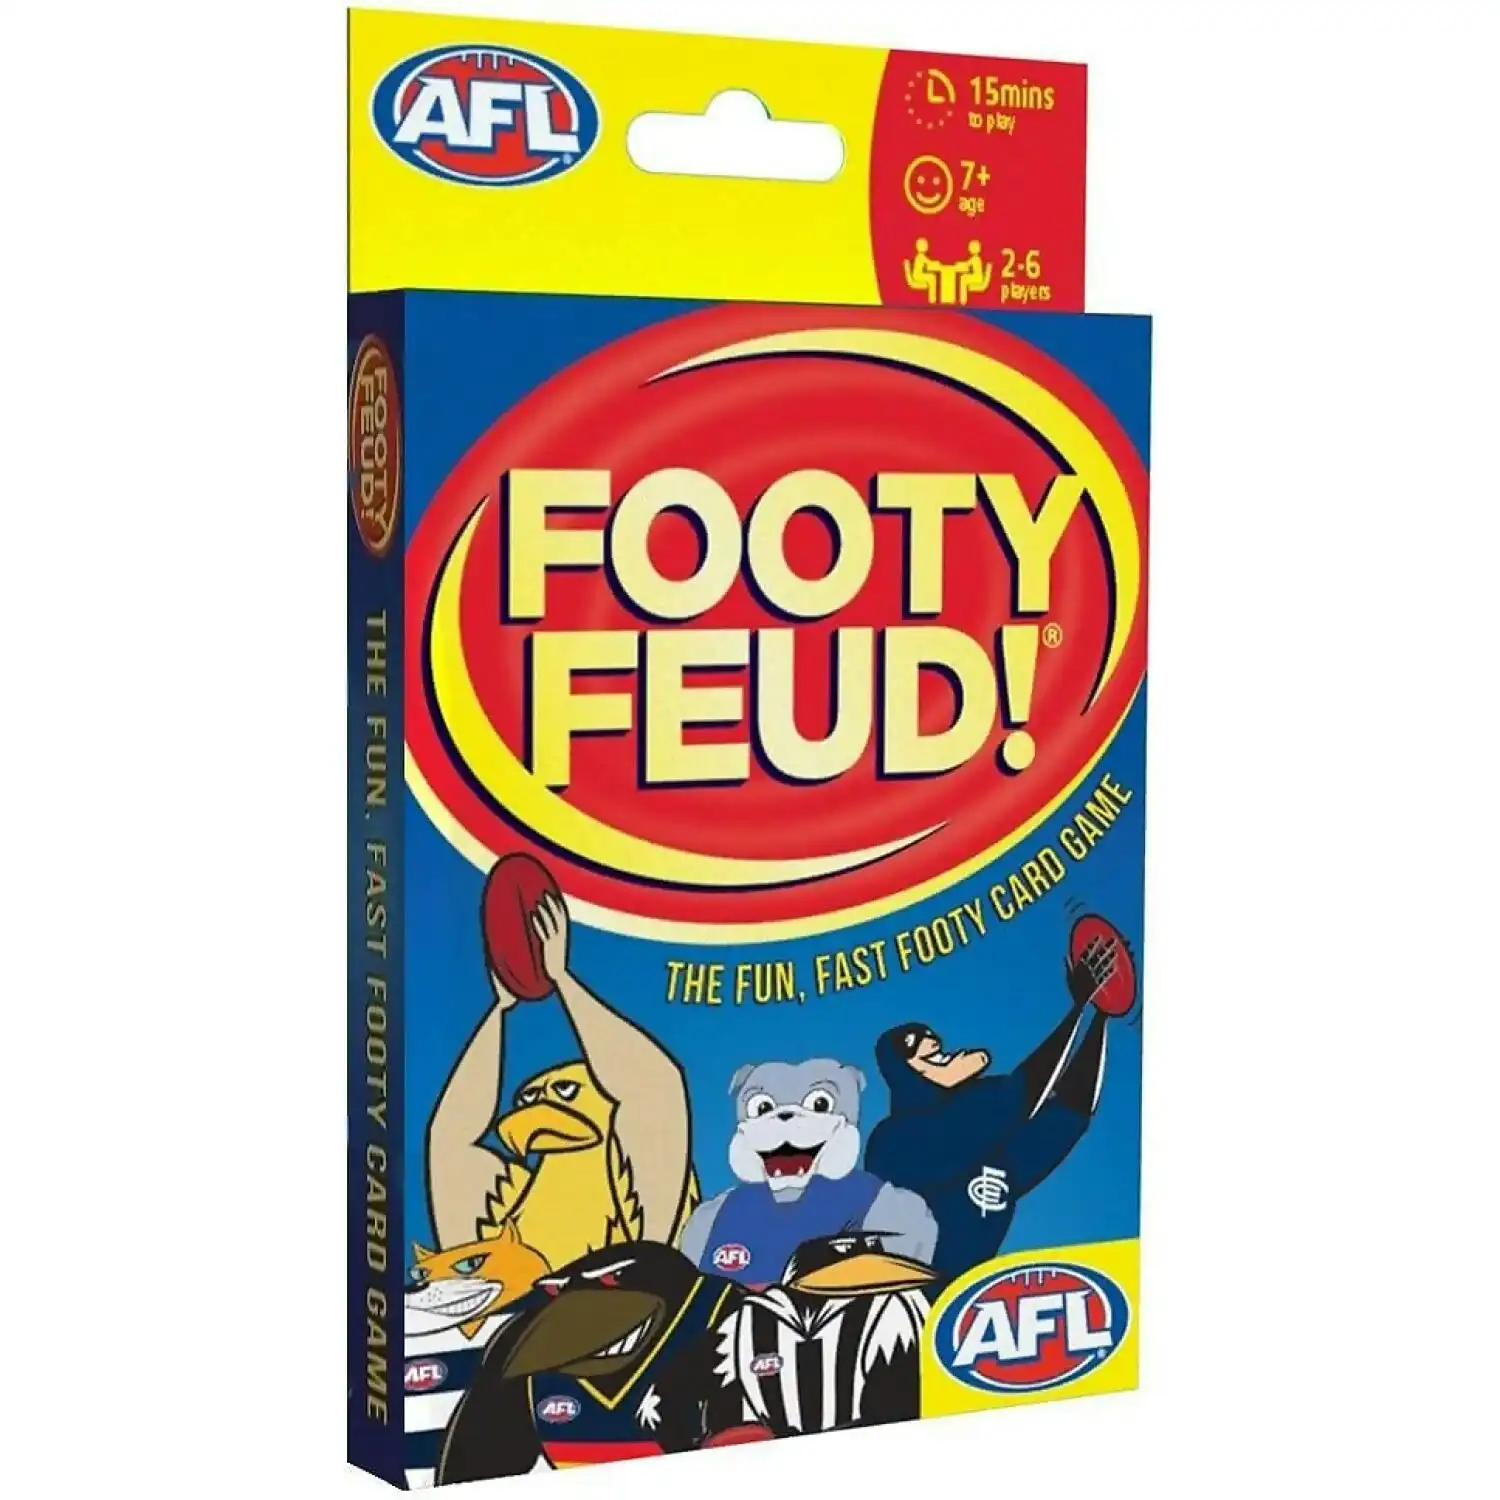 AFL - Footy Feud! Card Game